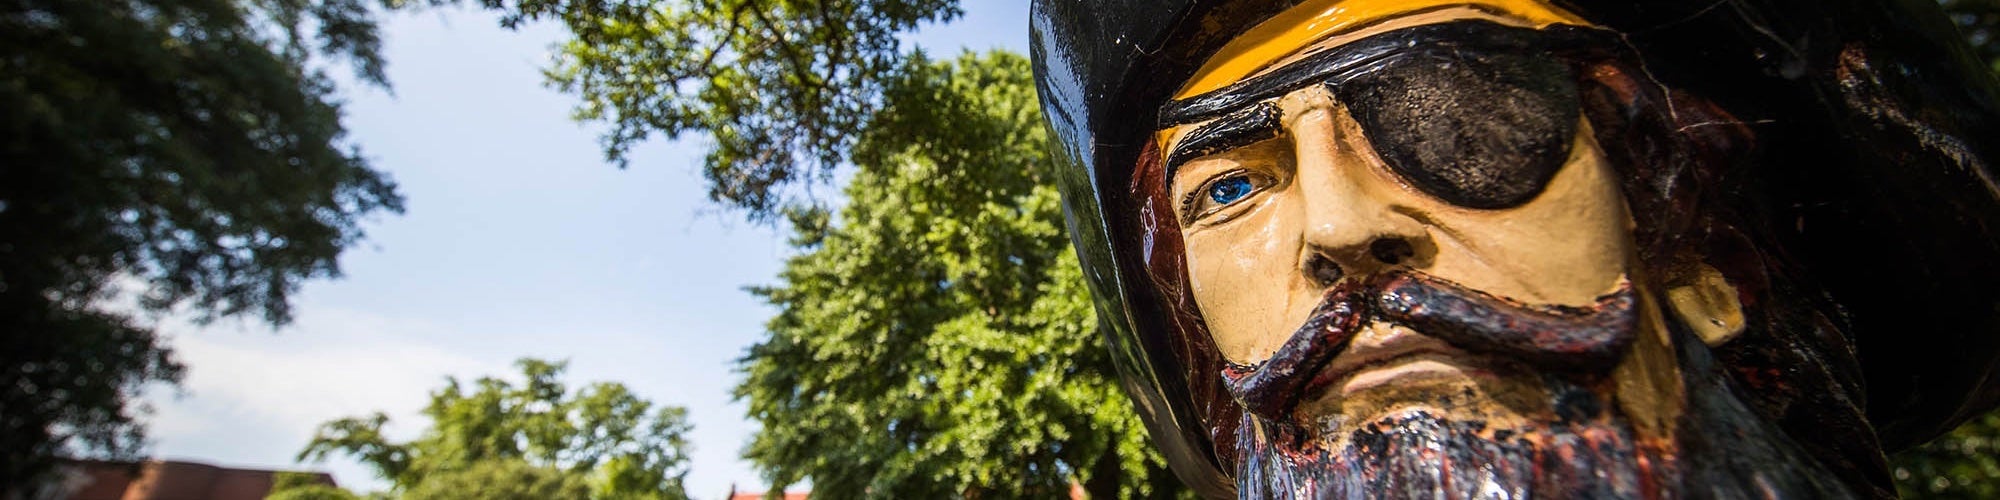 Closeup of pirate statue on campus